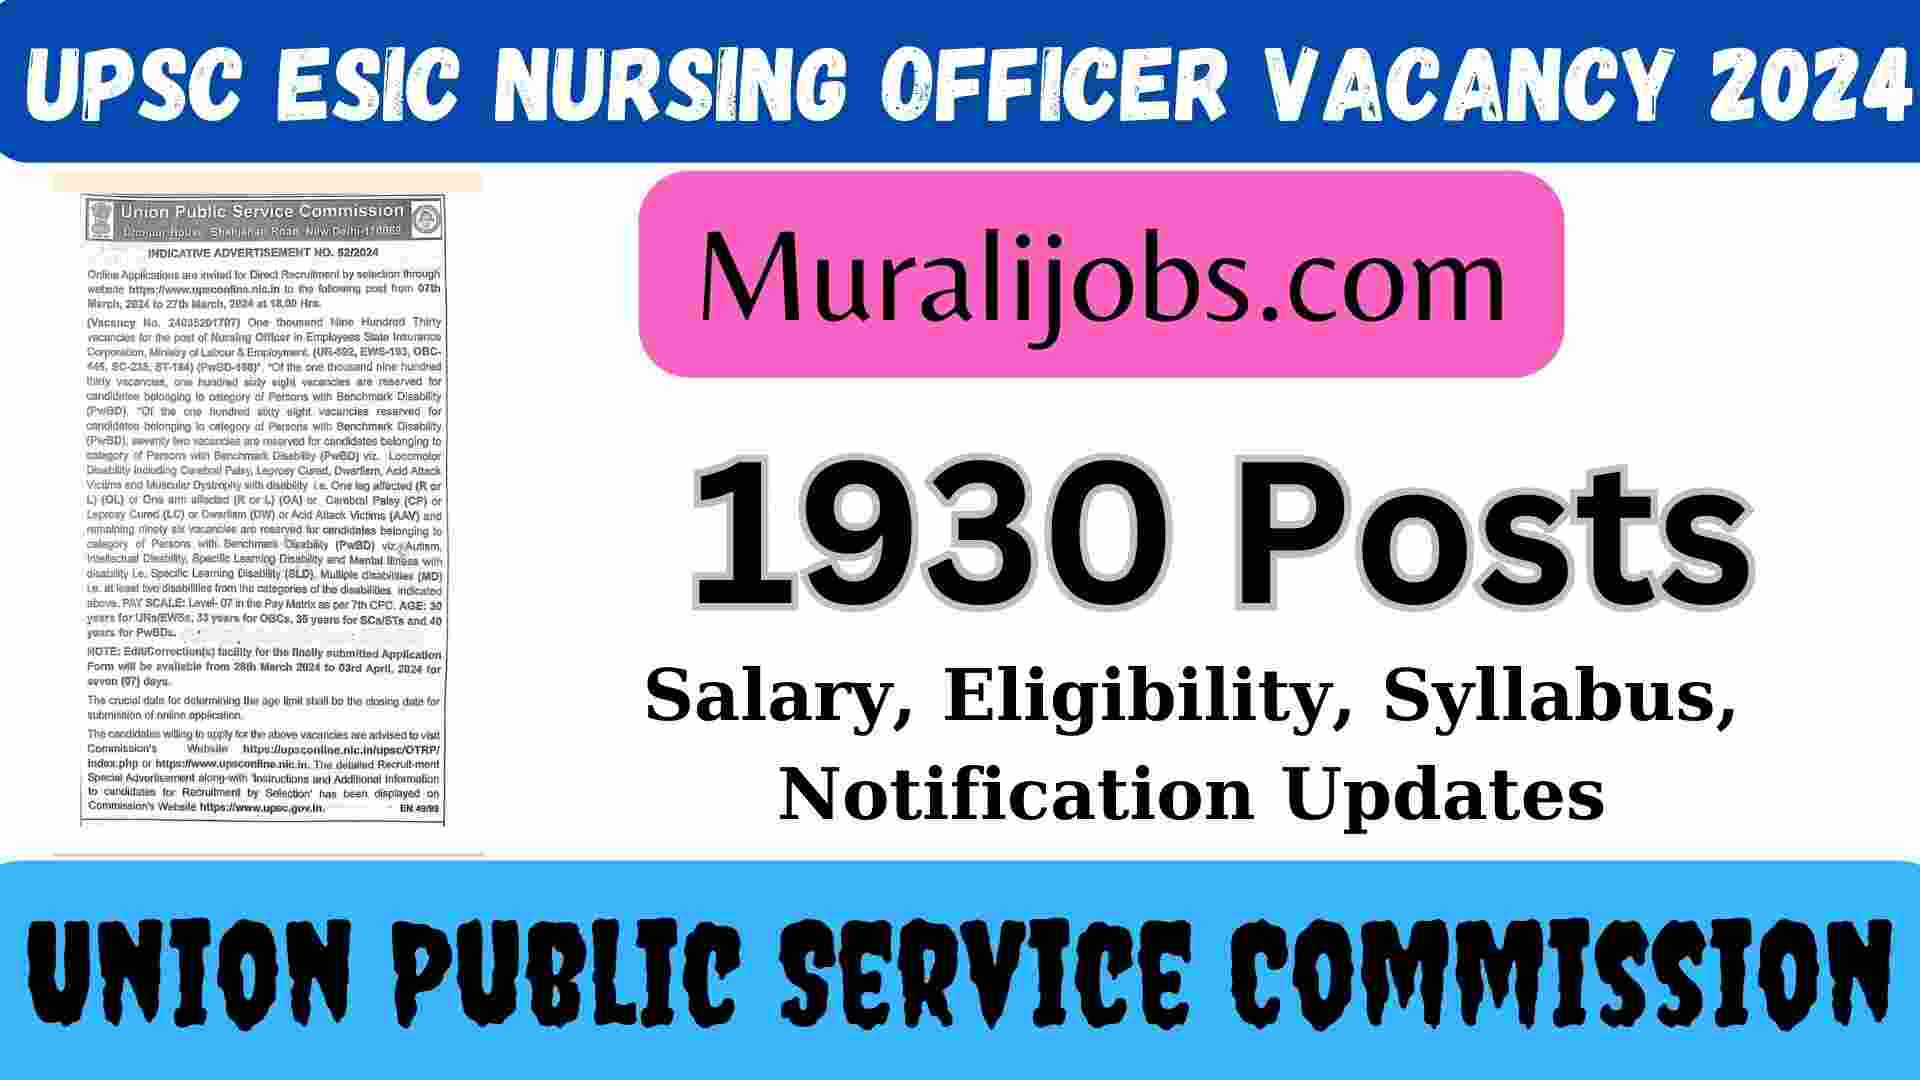 UPSC ESIC Nursing Officer Vacancy 2024 Salary 1930 Jobs Eligibility Notification Updates